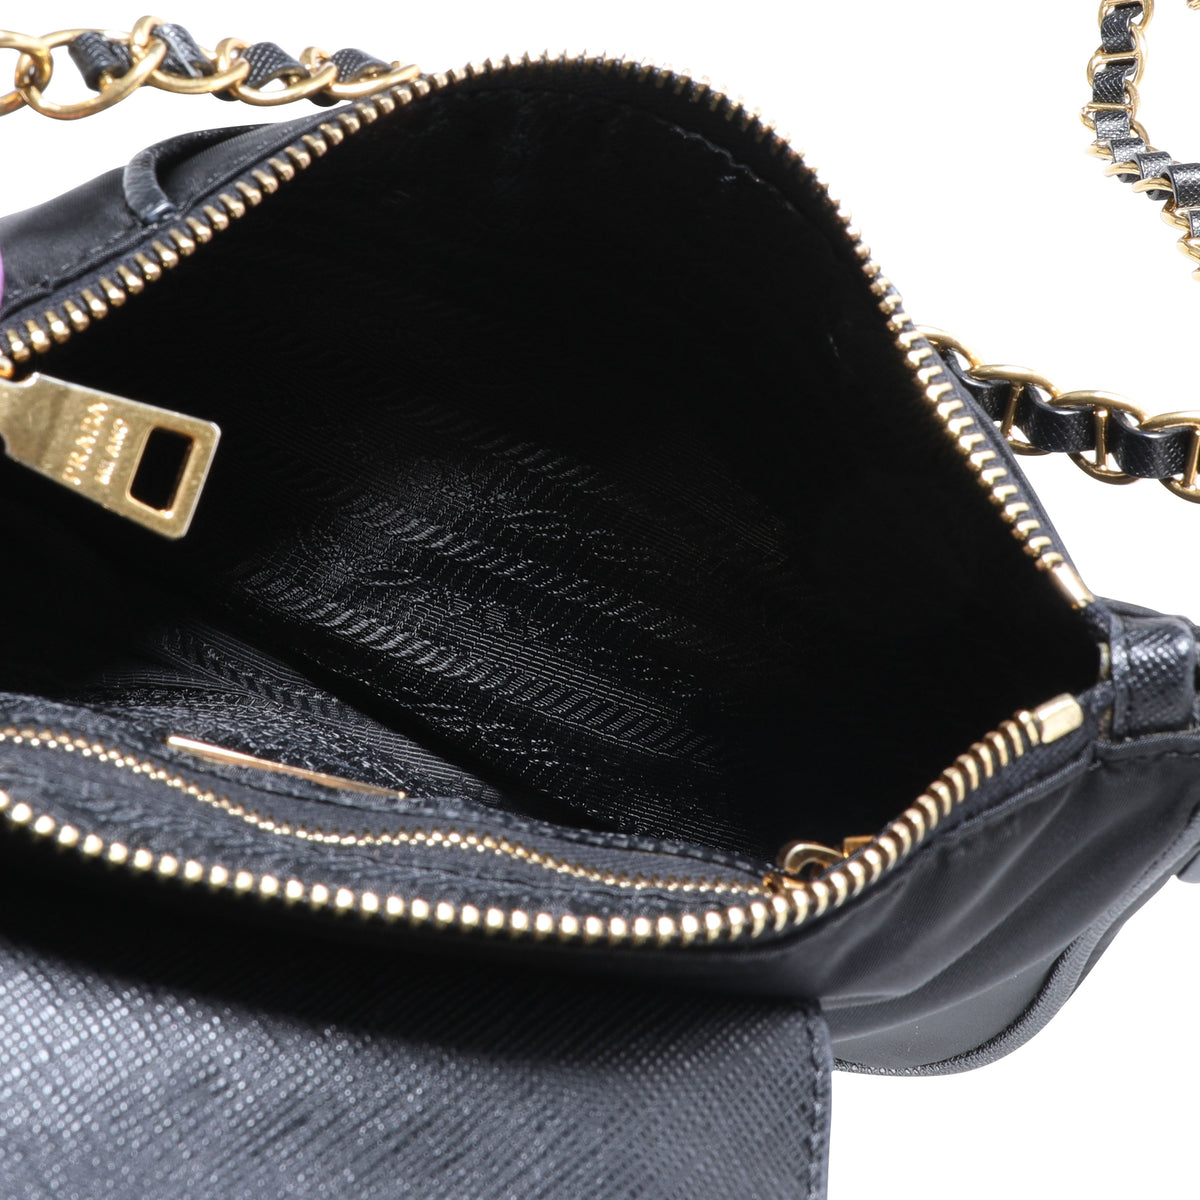 Prada Black Saffiano Leather Mini Chain Wallet, myGemma